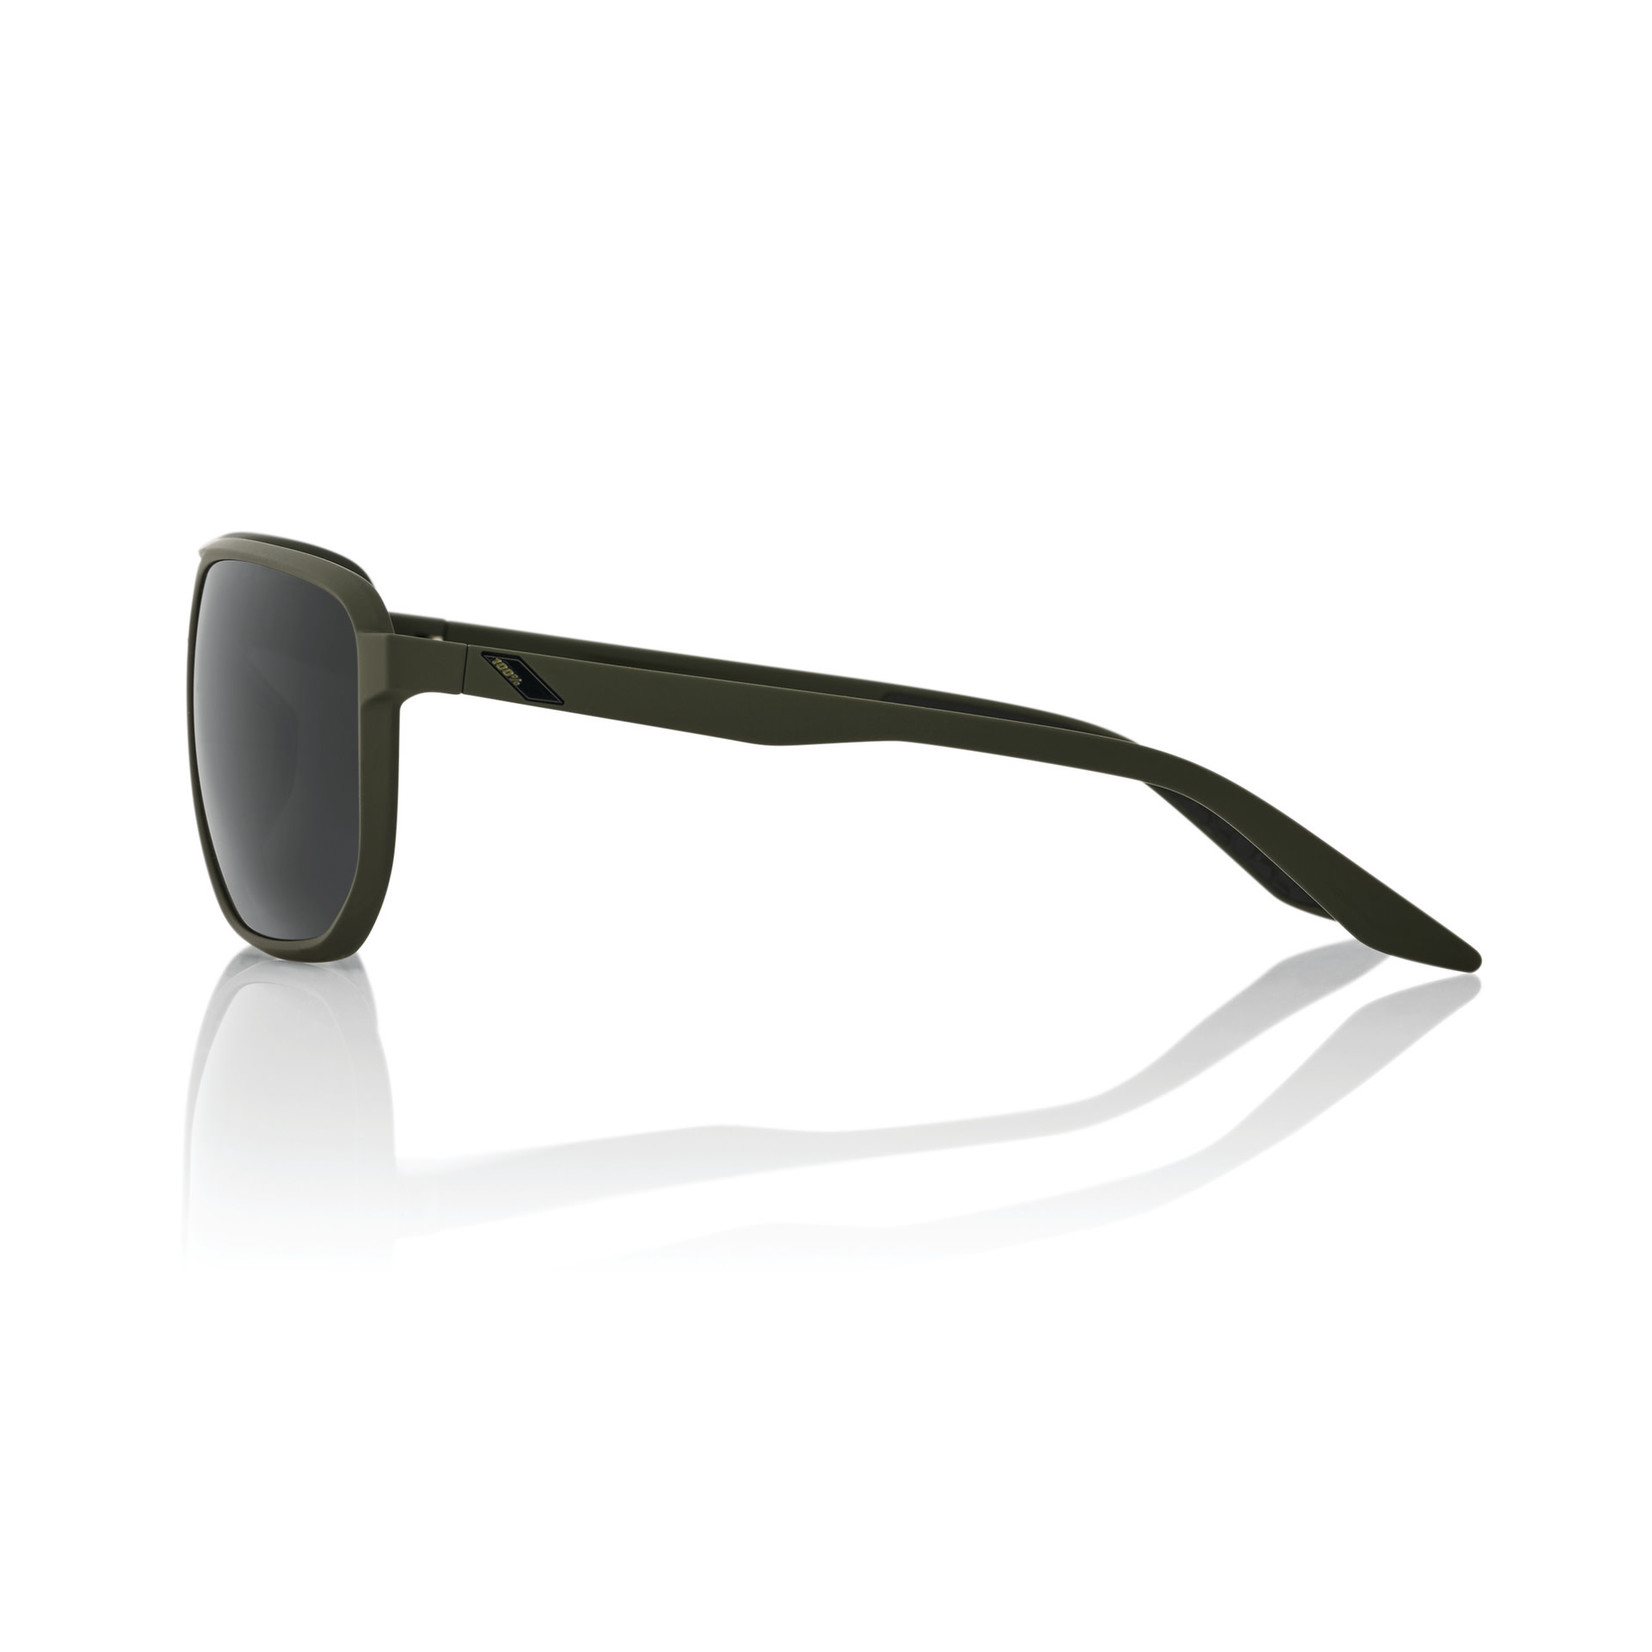 100 Percent 100% Konnor 100% UV Protection Bike Eyewear - Soft Tact Army Green - Smoke